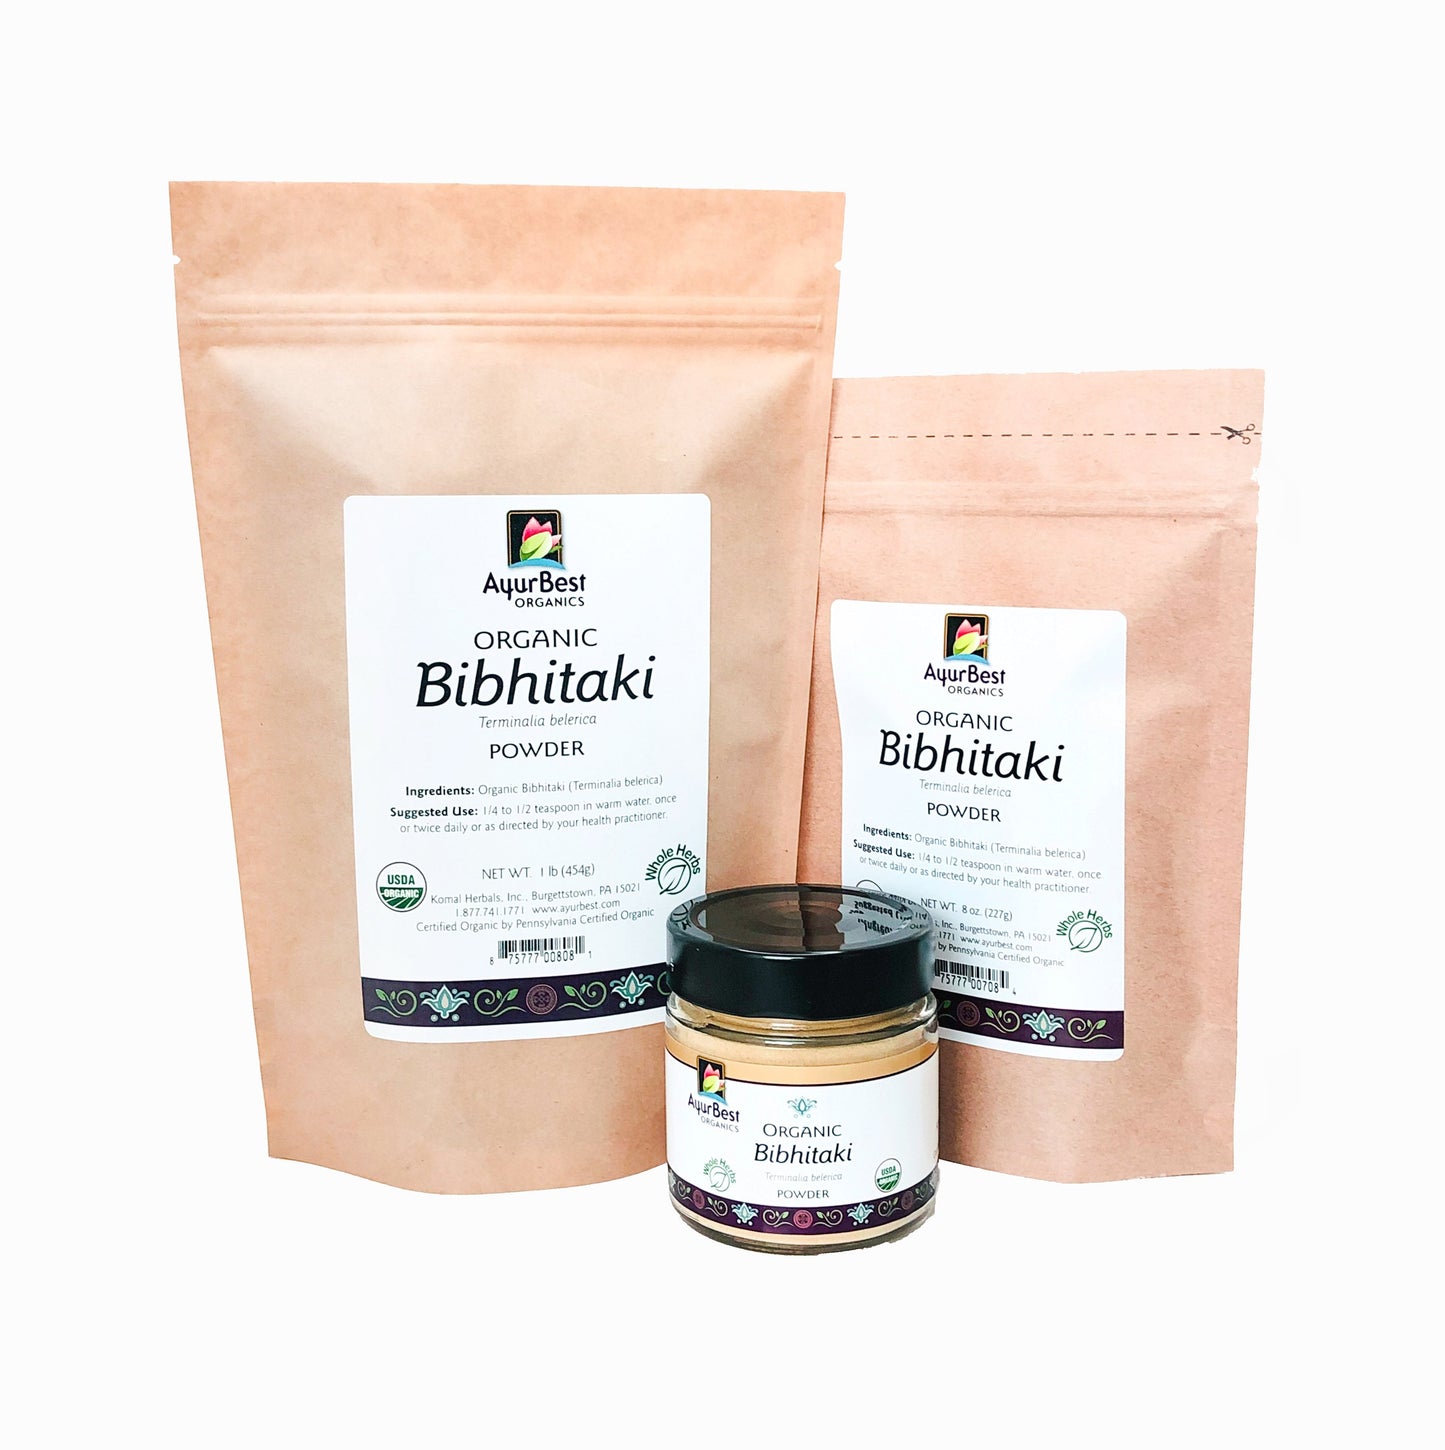 Wholesale Spices & Herbs - Bibhitaki Powder, Organic 8oz (224g) Bag